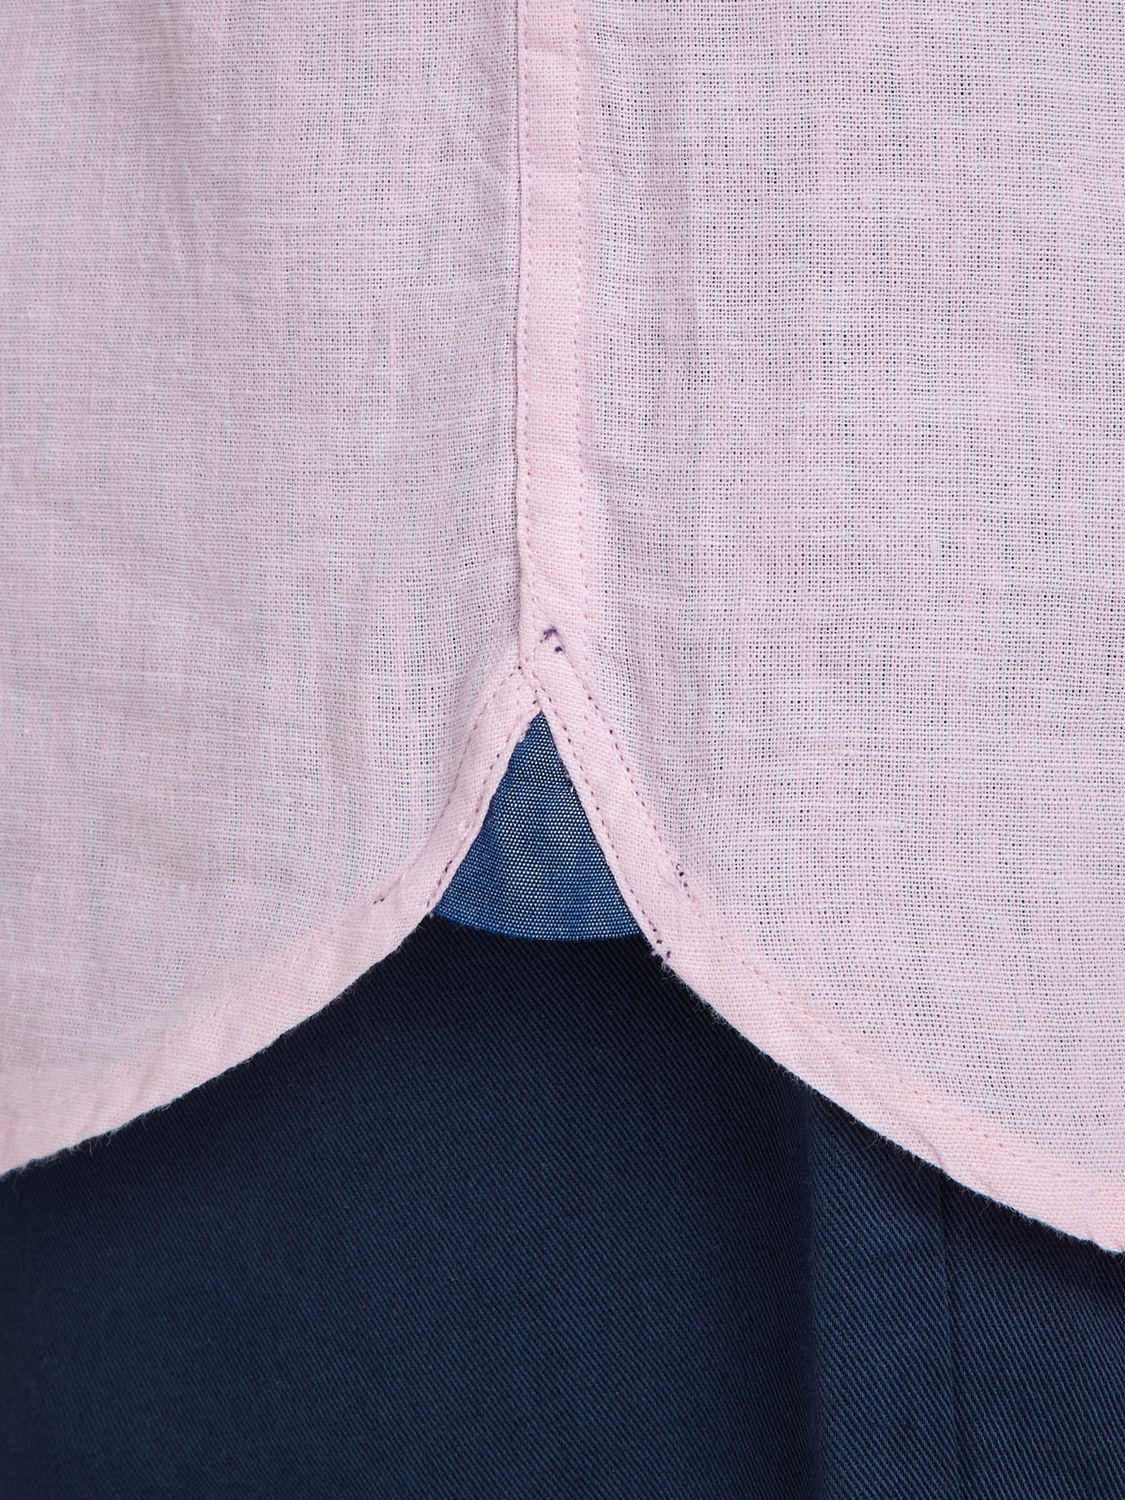 Buy Raging Bull Classic Linen Blend Short Sleeve Shirt, Pink Online at johnlewis.com